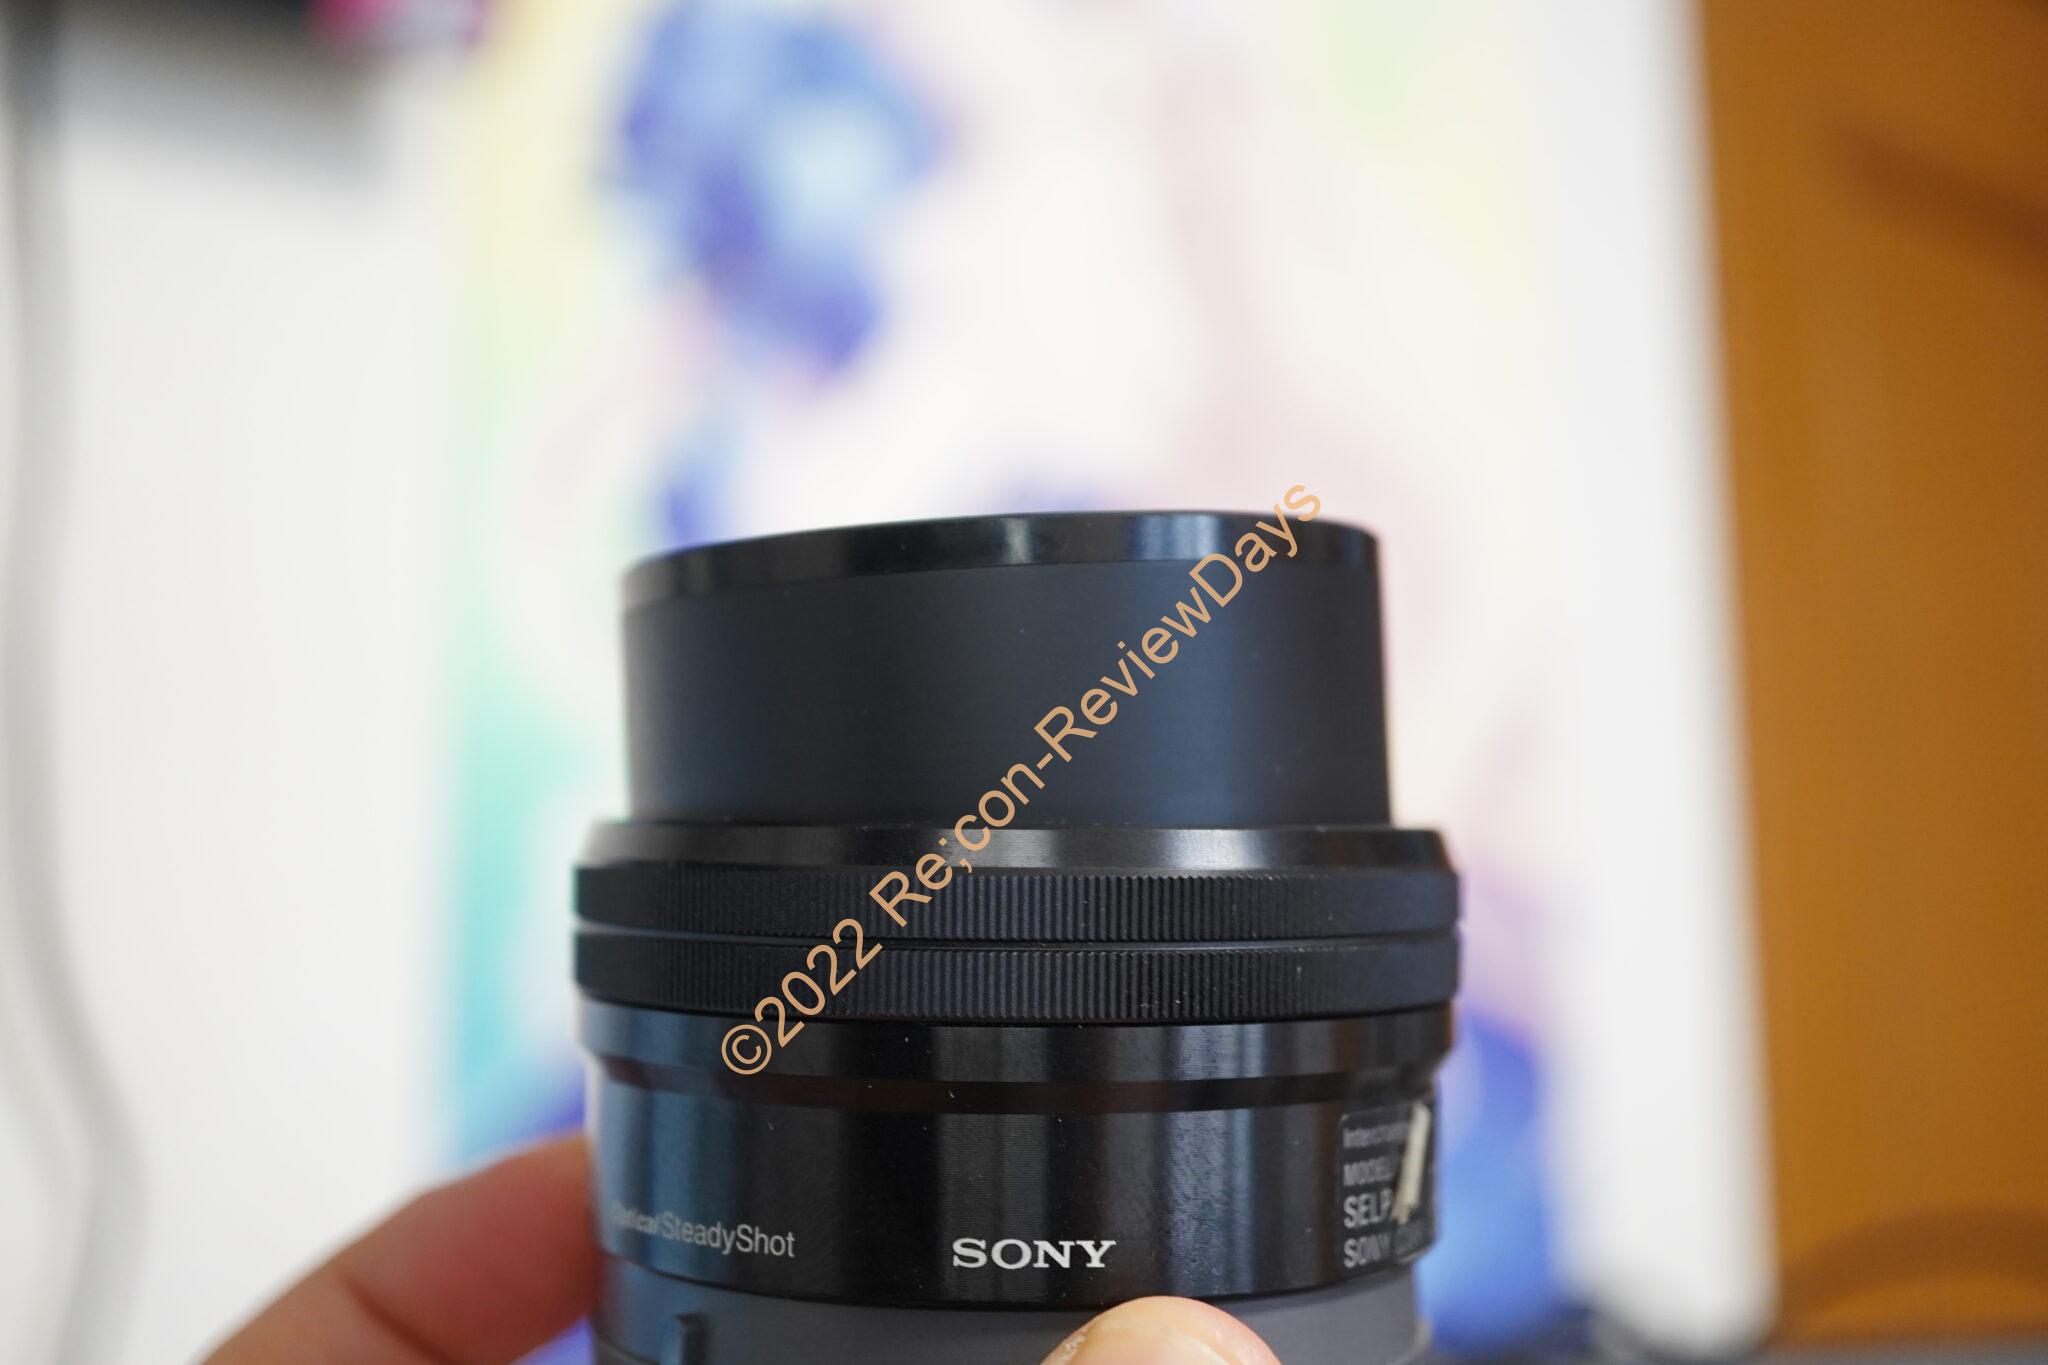 SONY Eマウント用標準ズームレンズ「SELP1650」が故障しました #SONY #SELP1650 #レンズ #カメラ